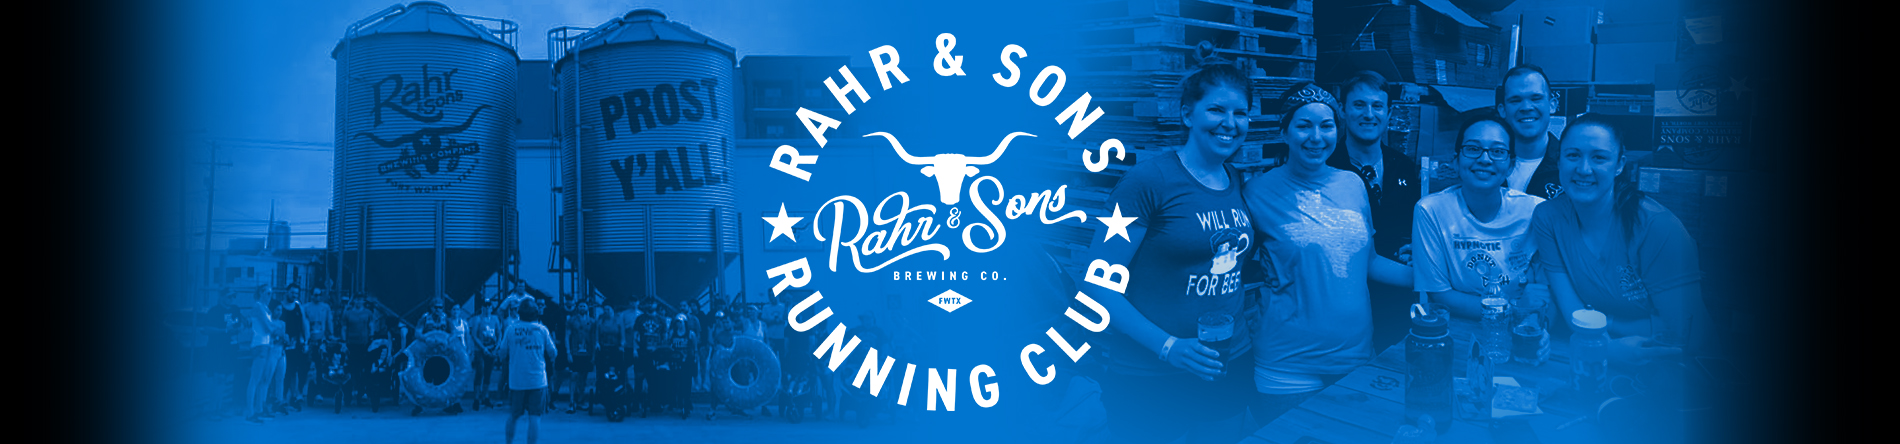 Rahr & Sons Oktoberfest 5K Social Runs